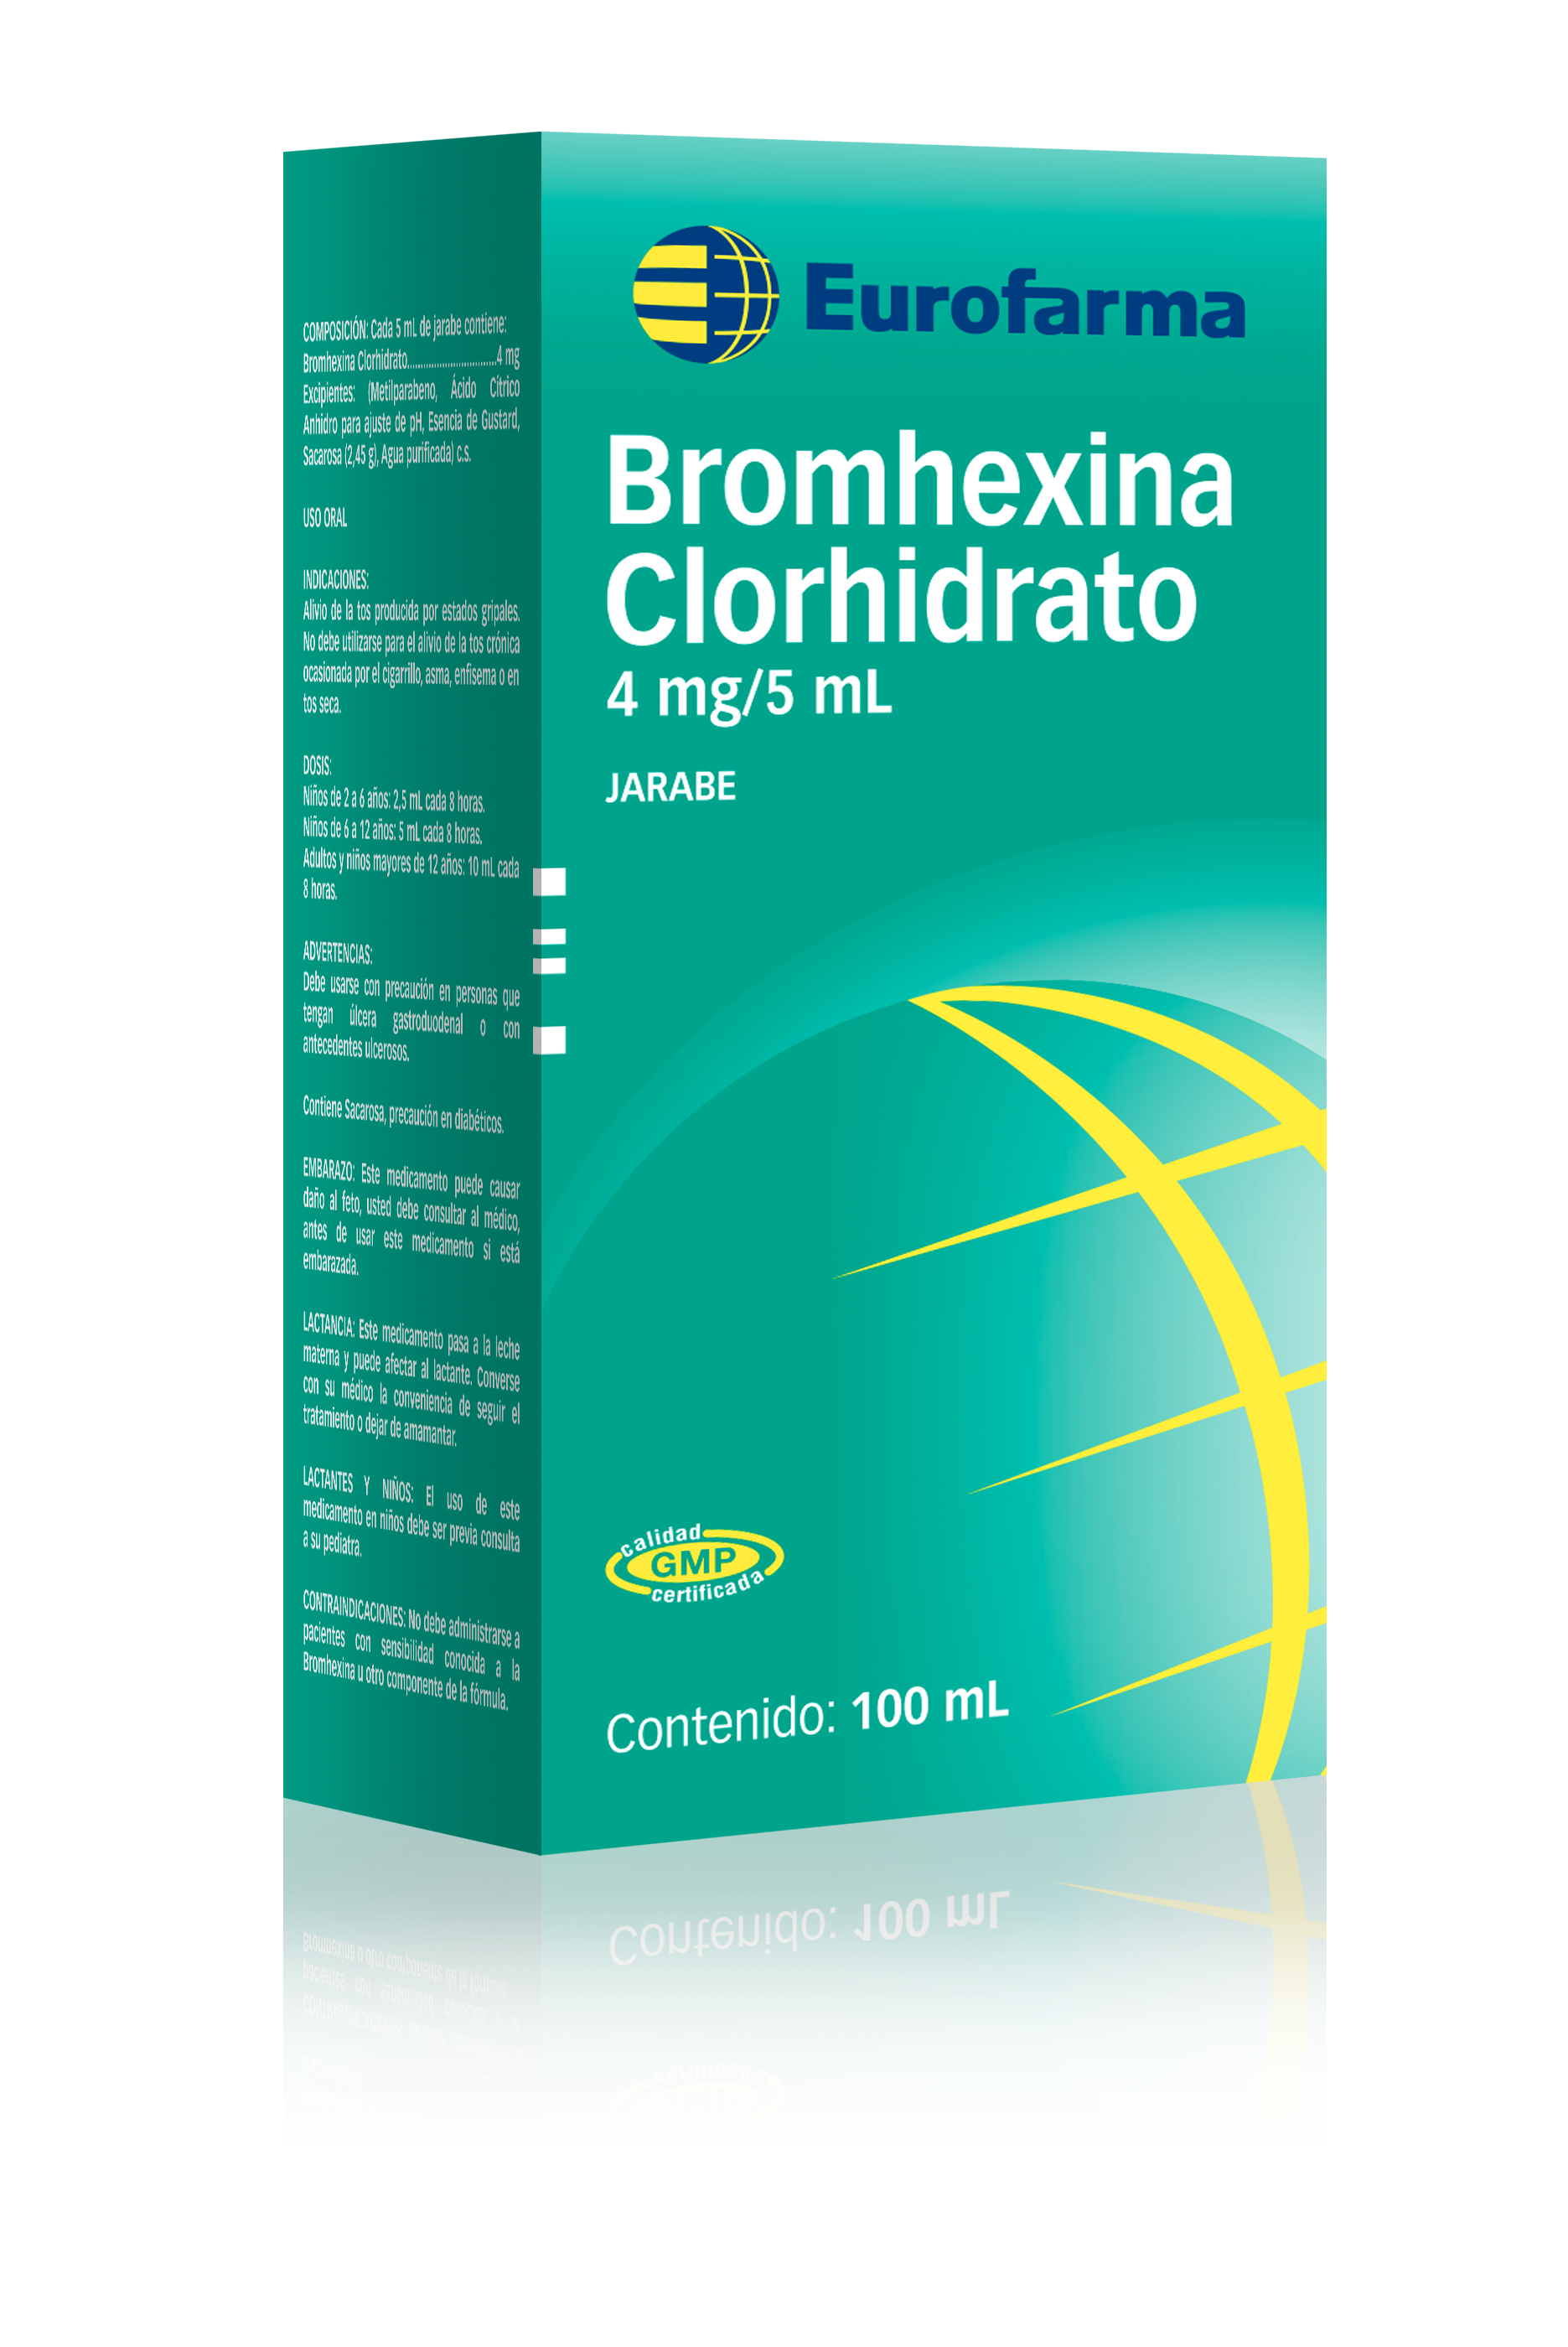 Bromhexina Clorhidrato 4 mg. / 5 mL. en jarabe